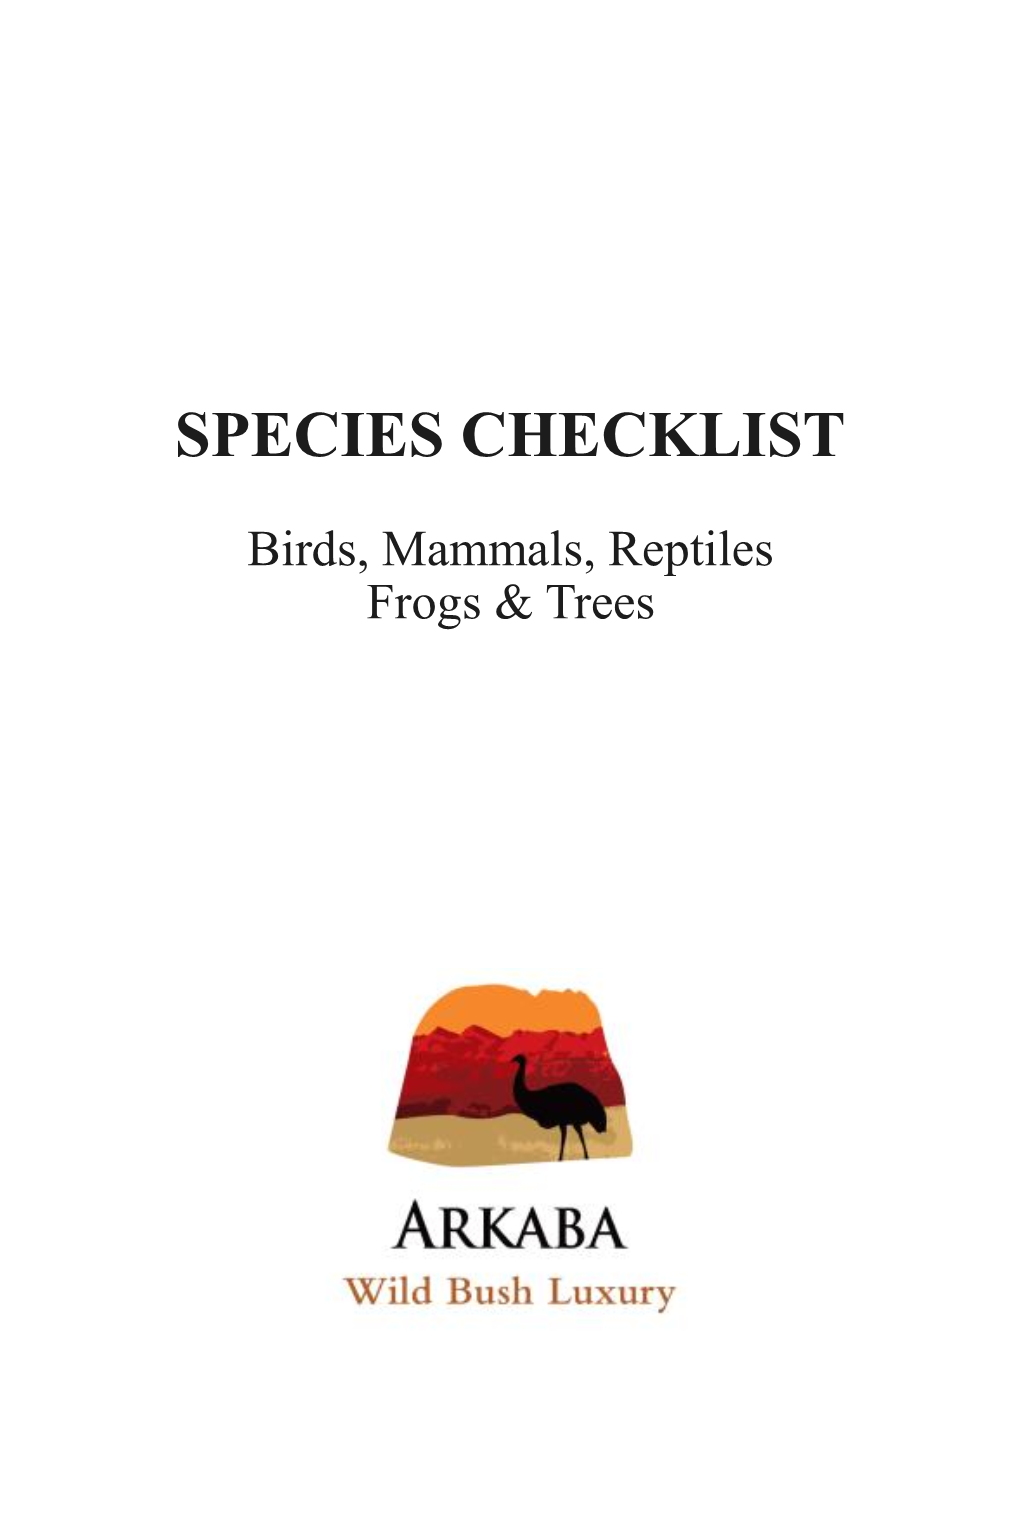 Species List